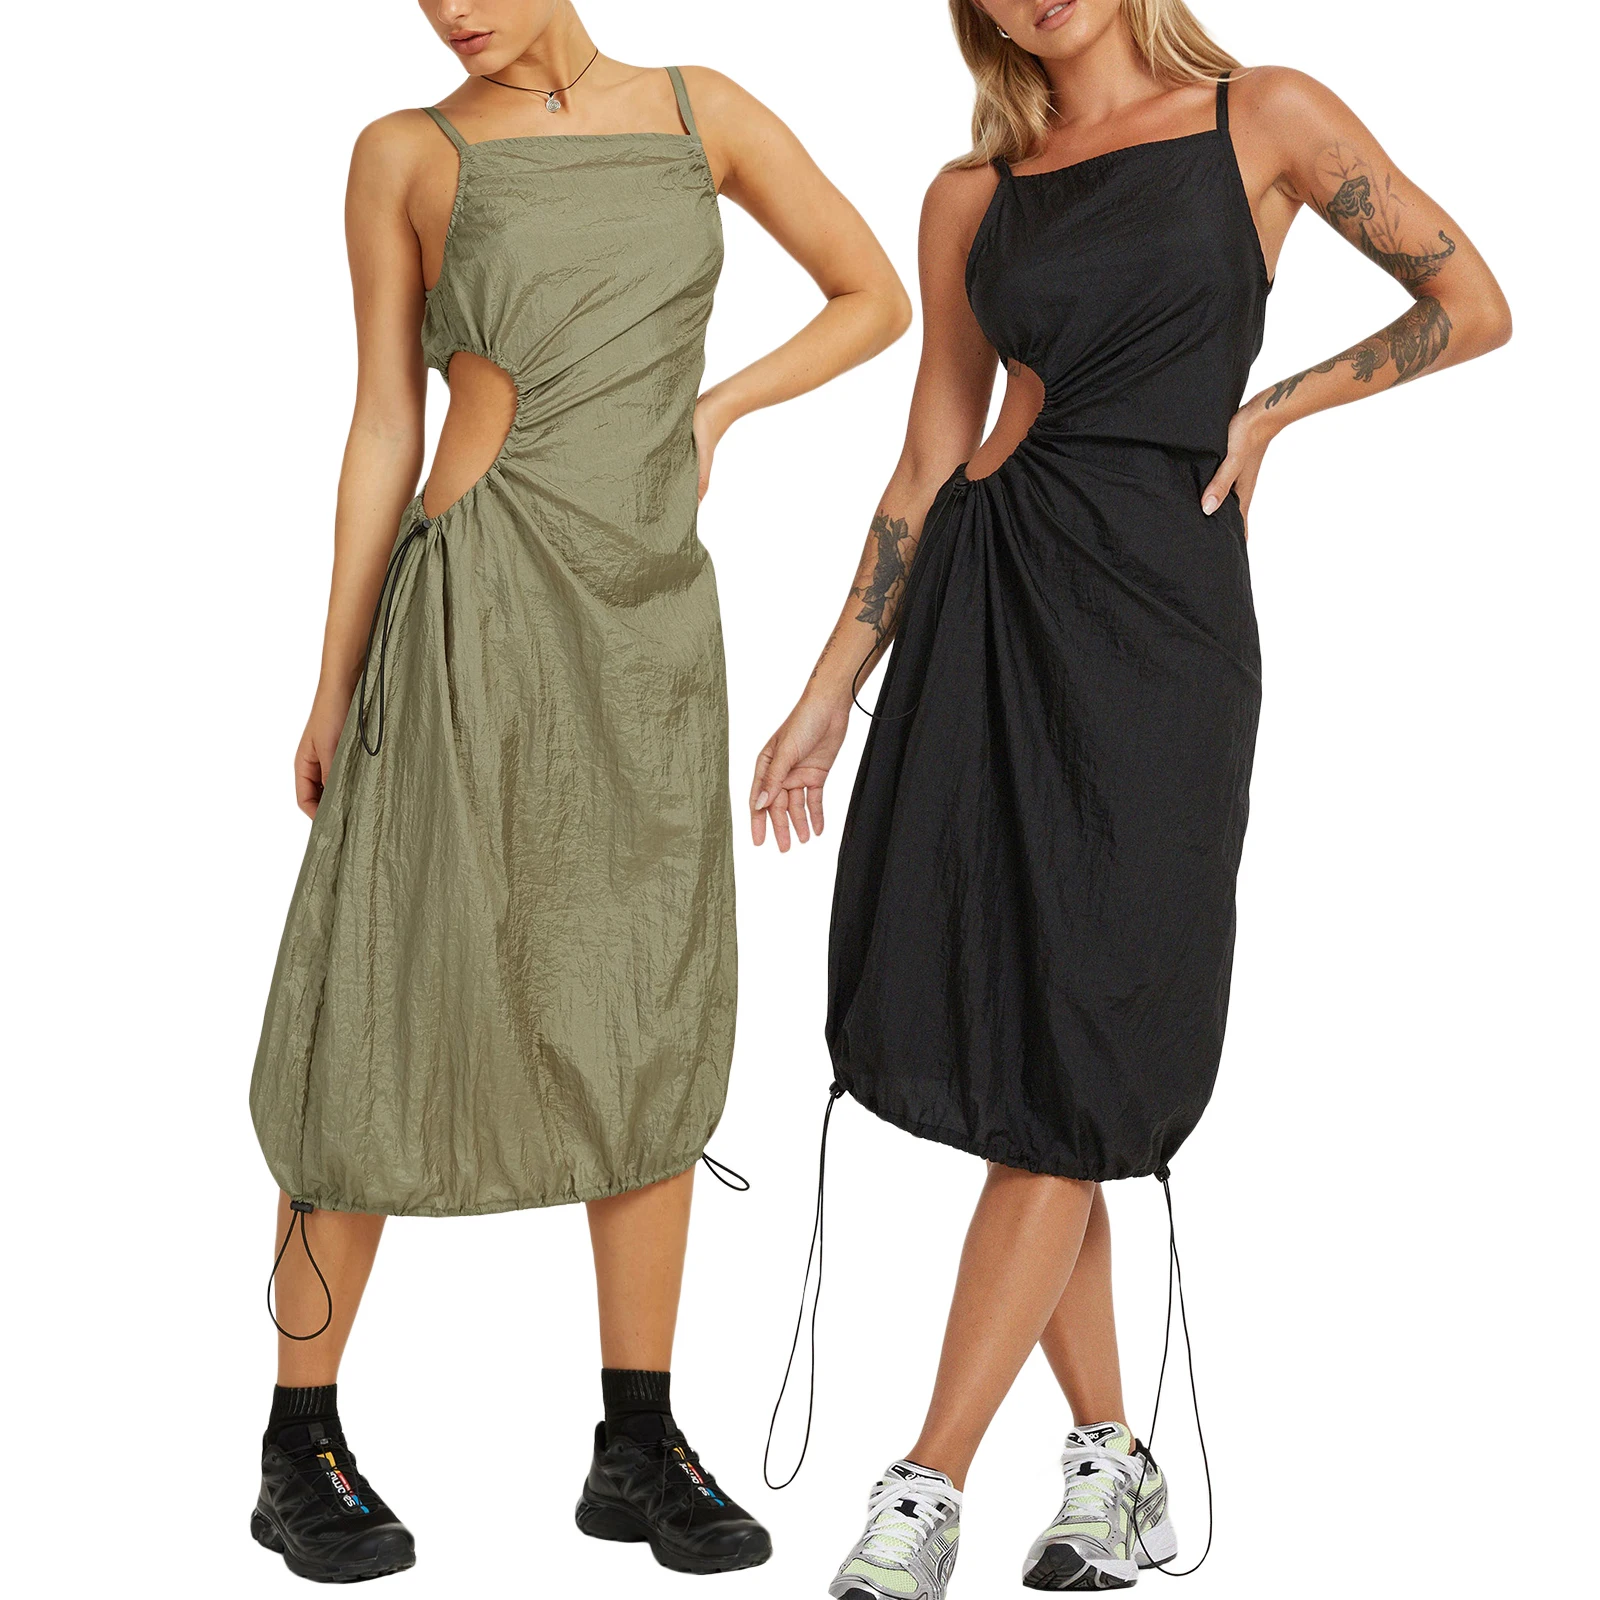 

Women Summer Casual Dress Solid Color Spaghetti Strap Sleeveless Cutout Drawstring Hem Dress for Females S/M/L